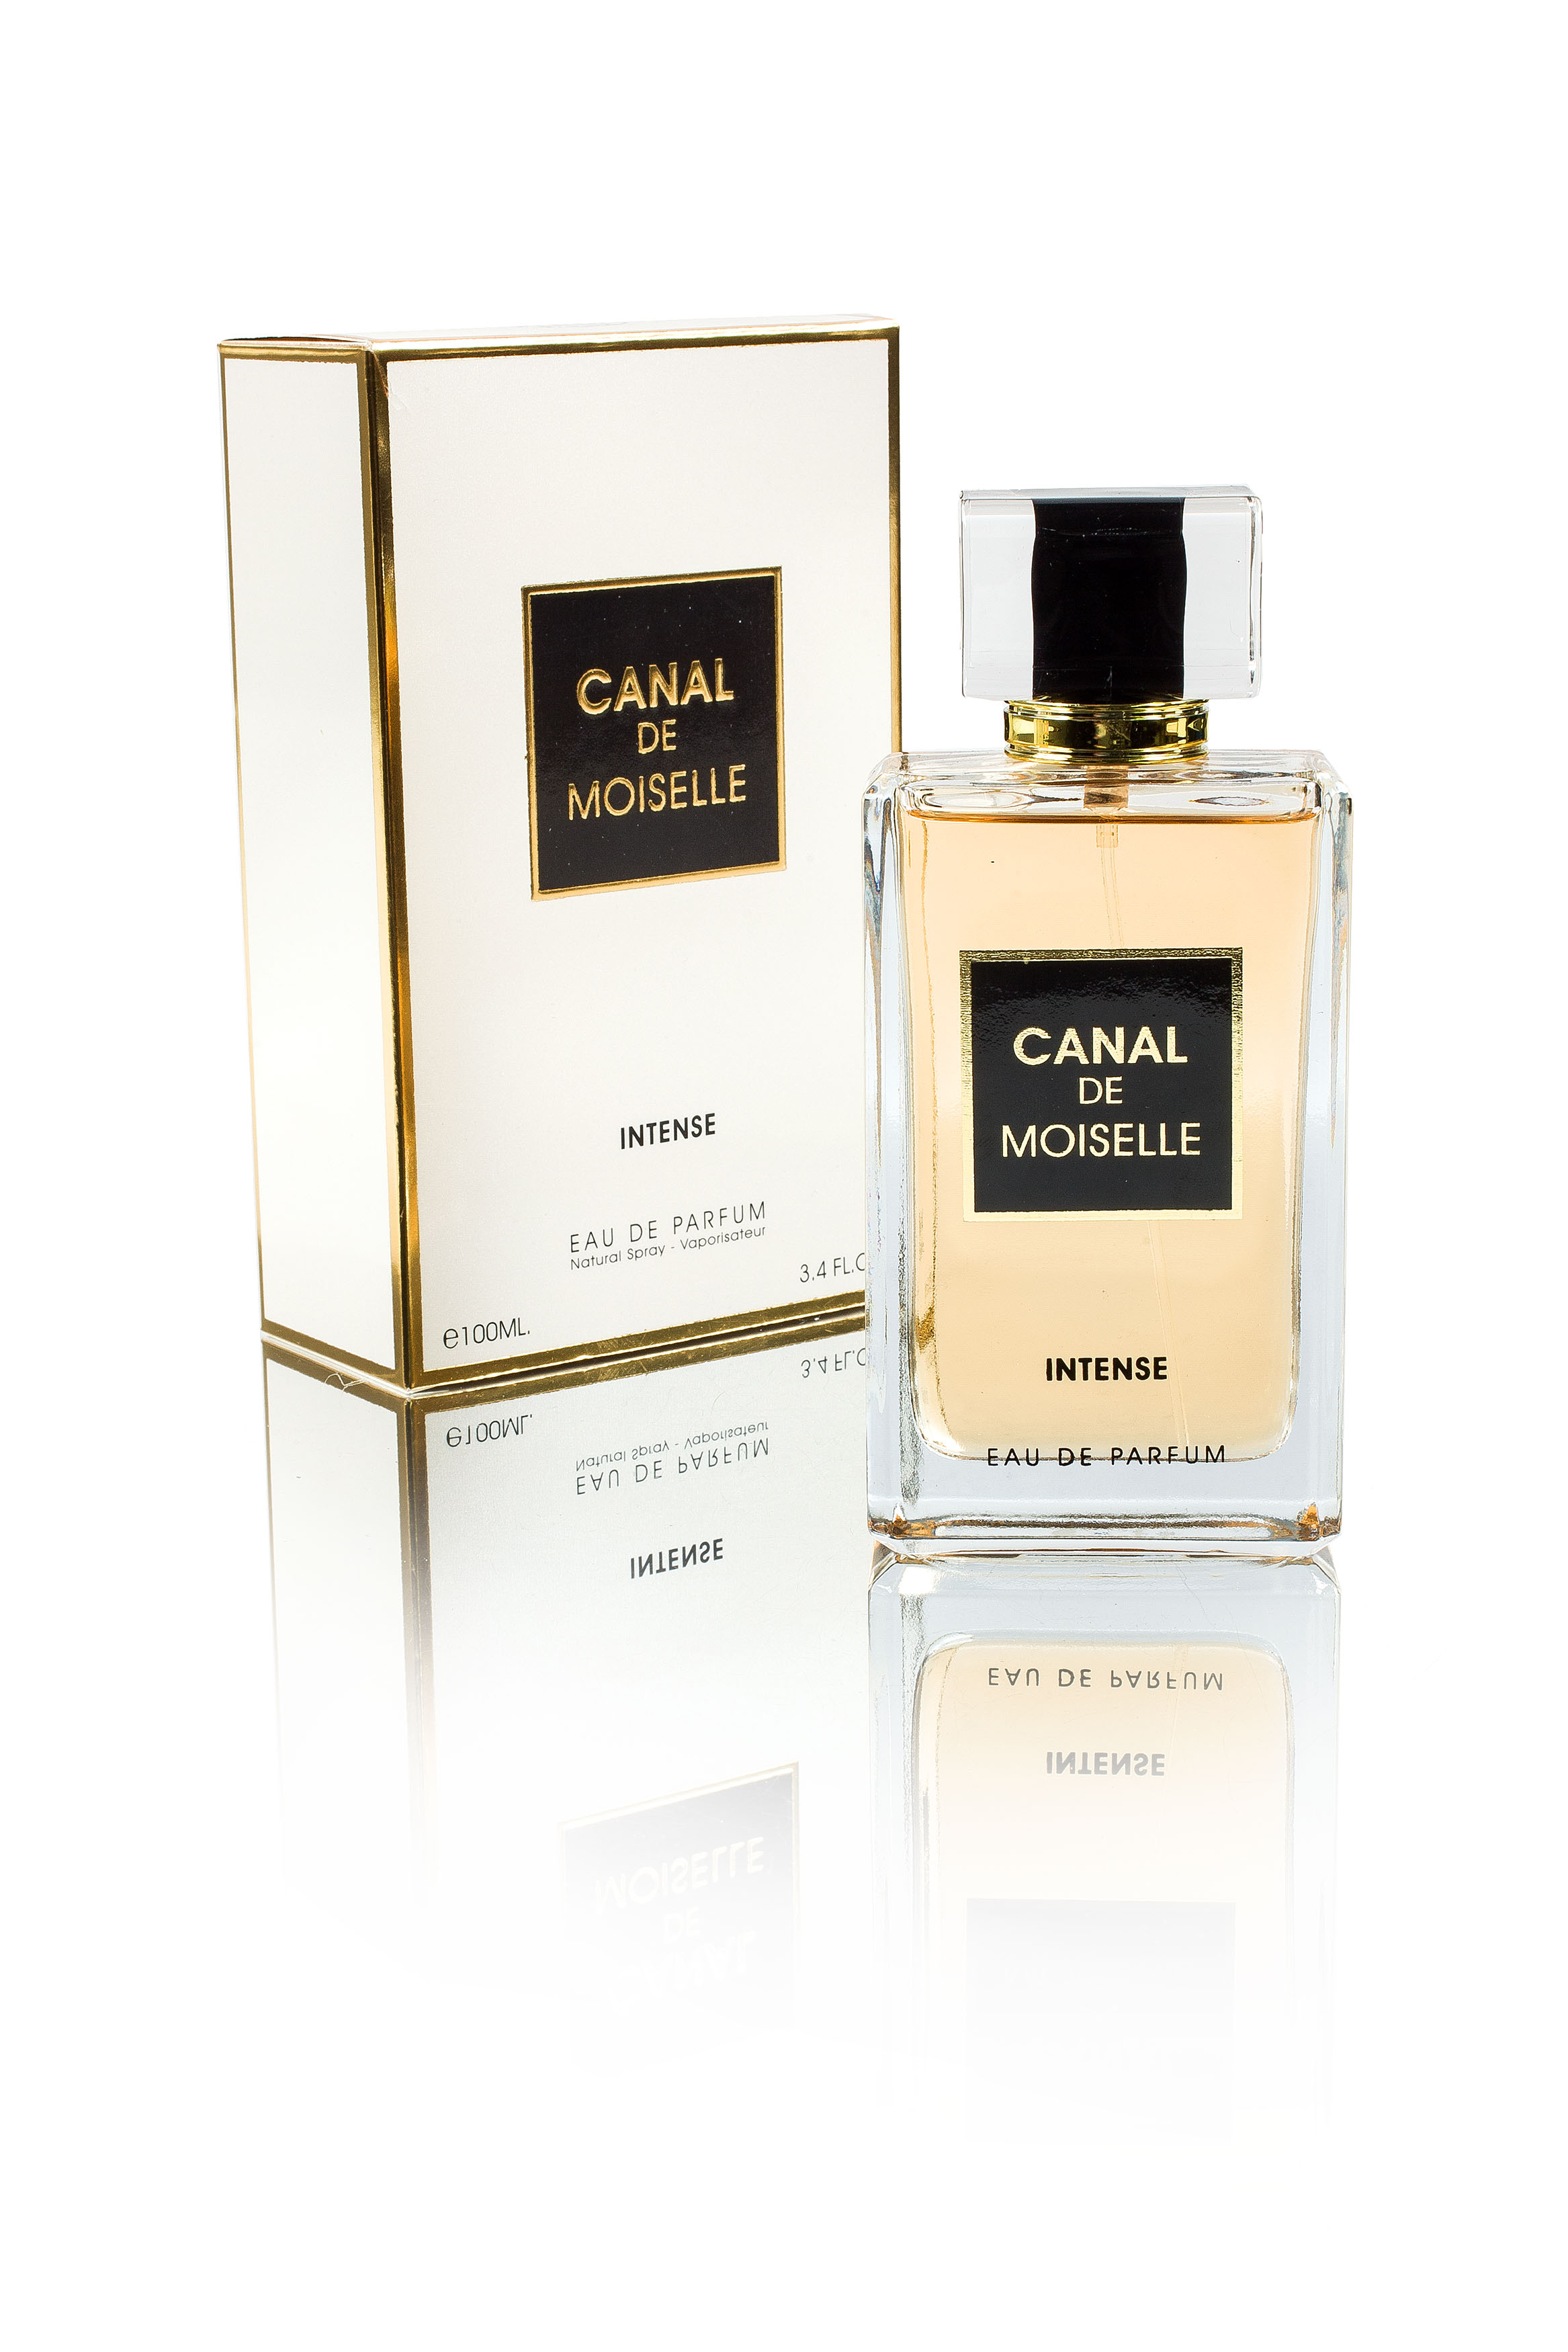 Porównywarka cen perfum: Chanel Coco Mademoiselle Intense